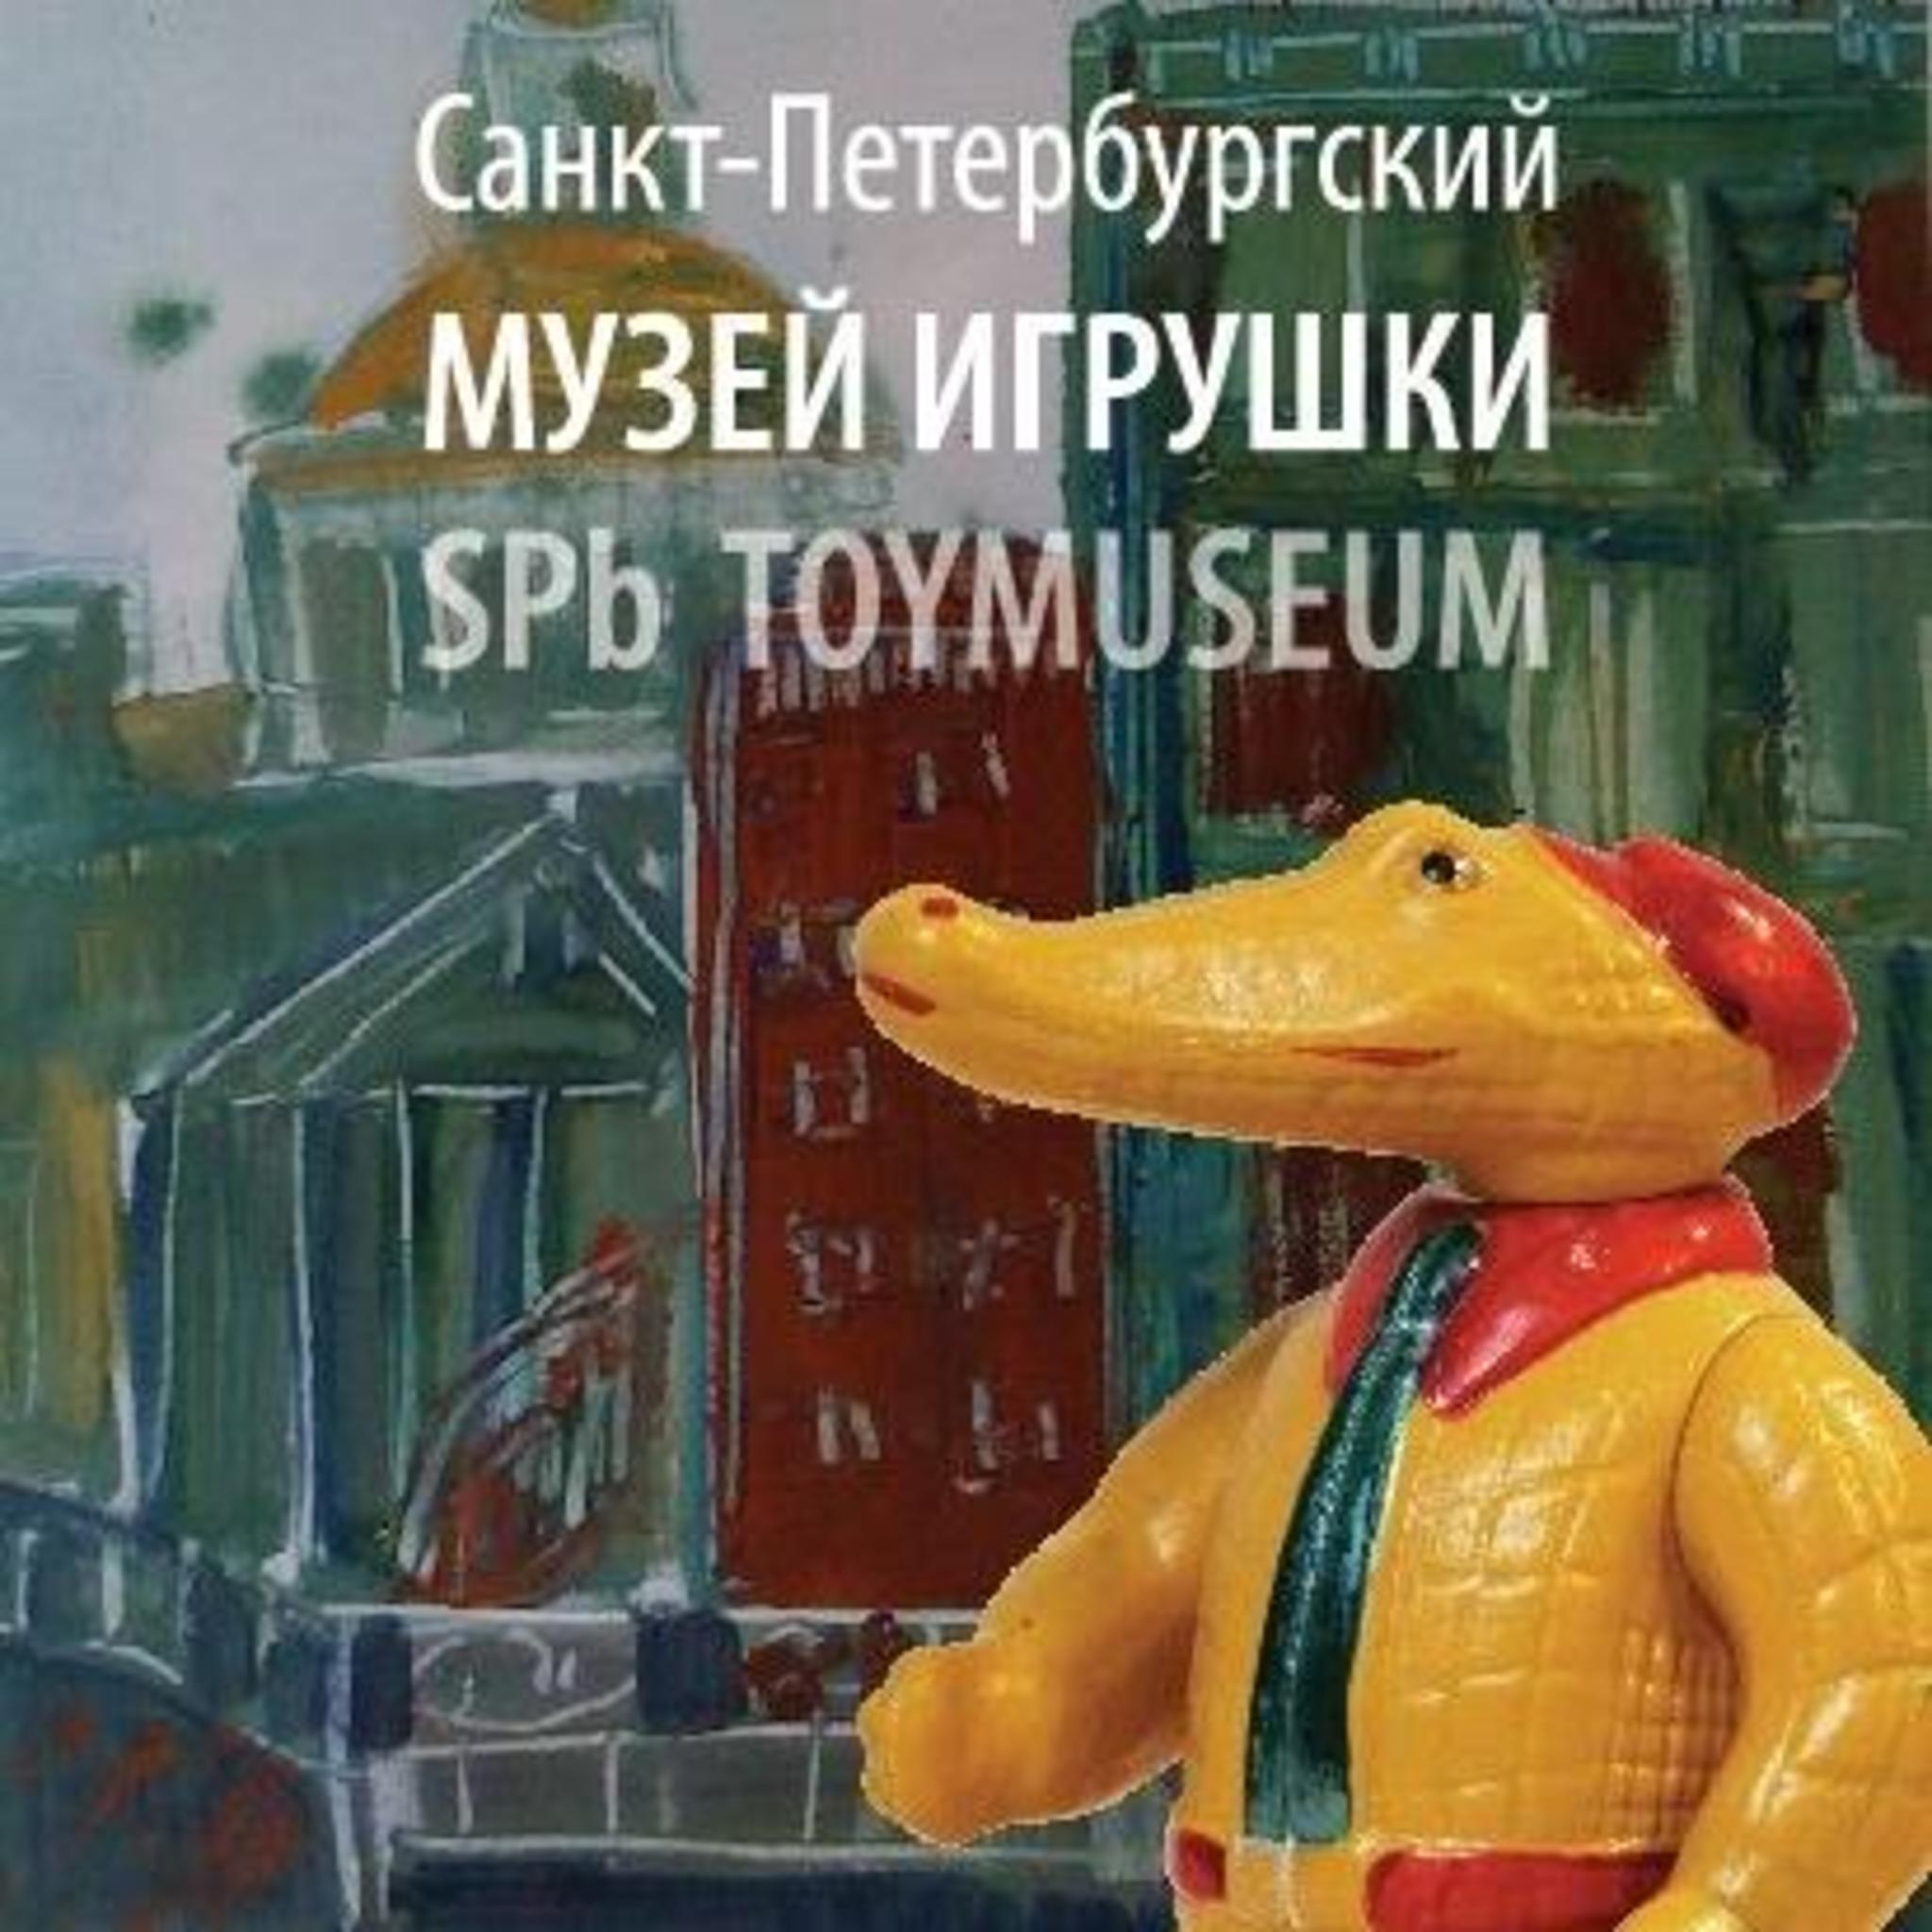 St. Petersburg Museum of Toys